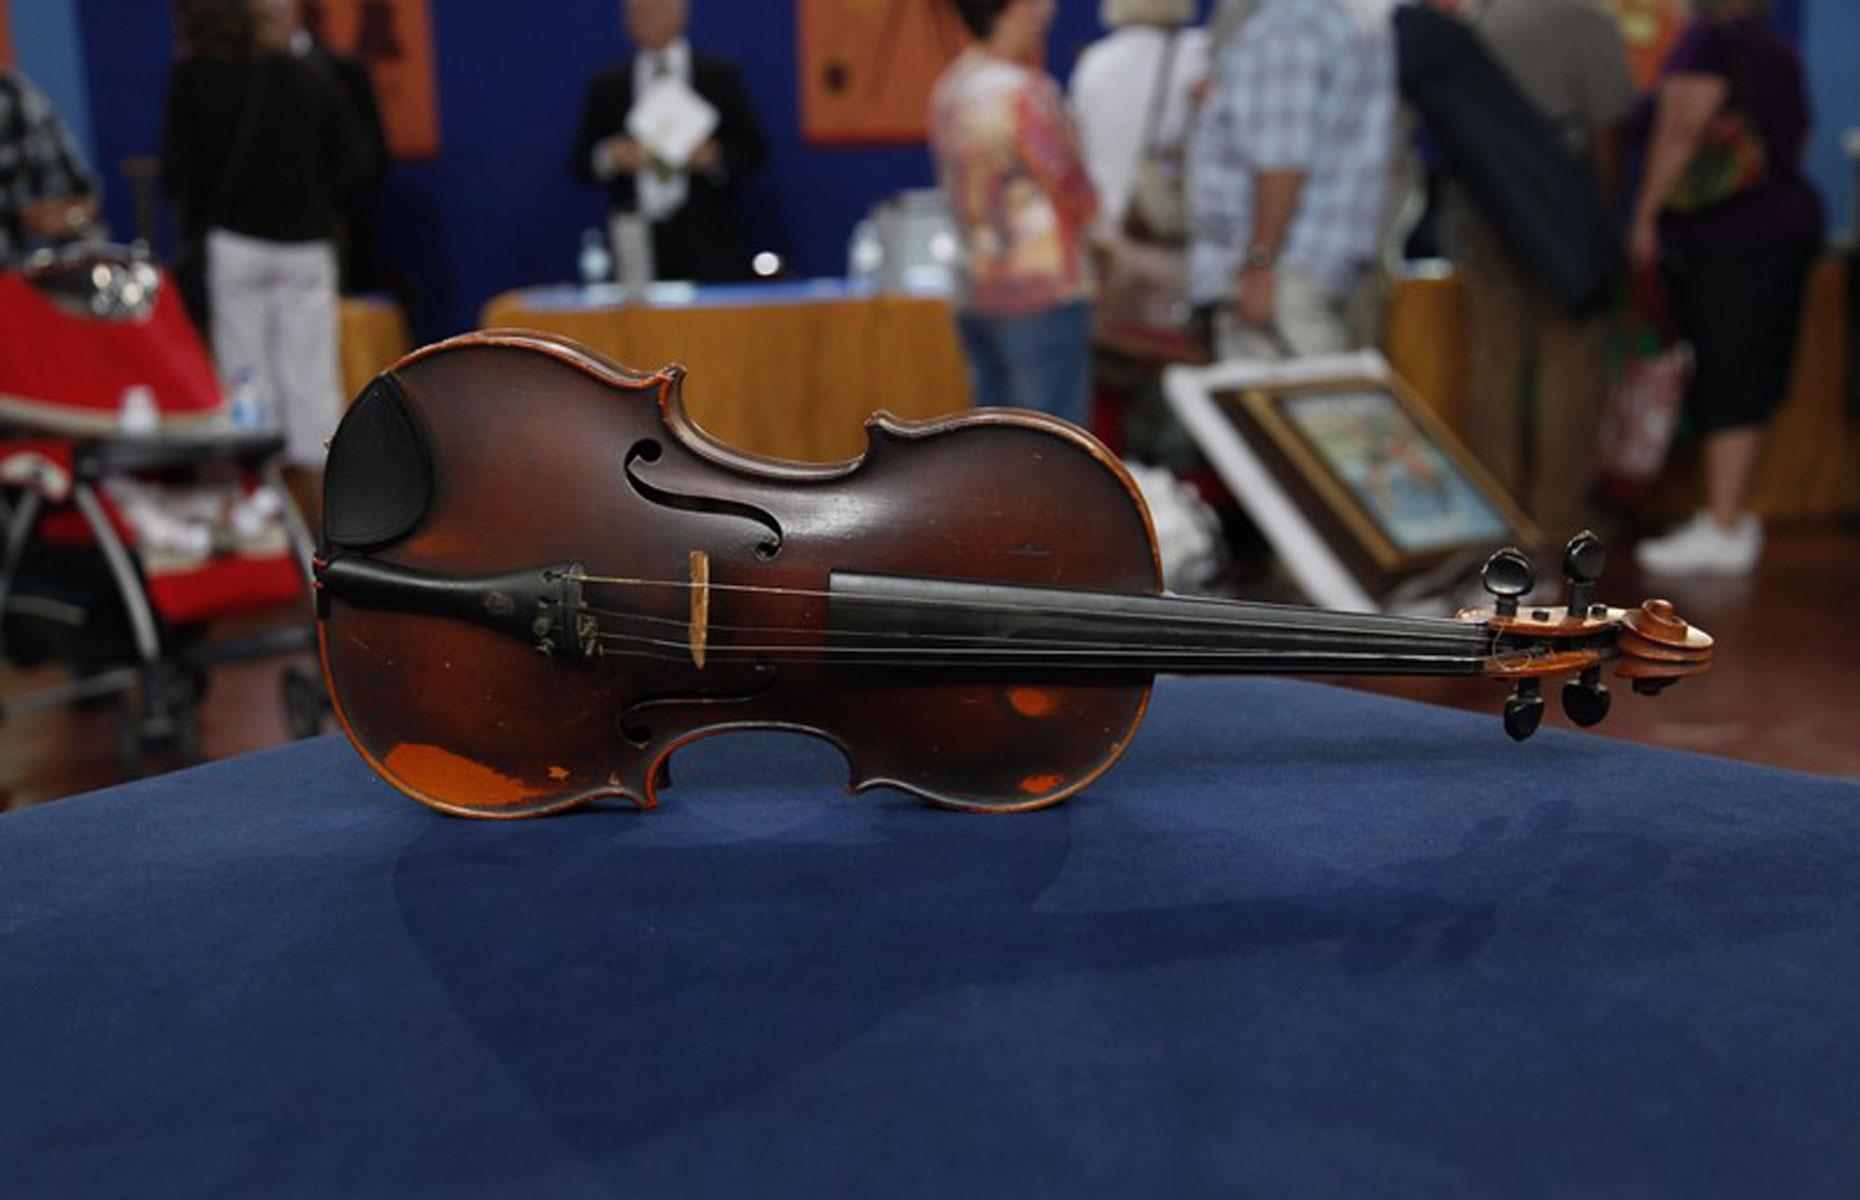 An Italian violin